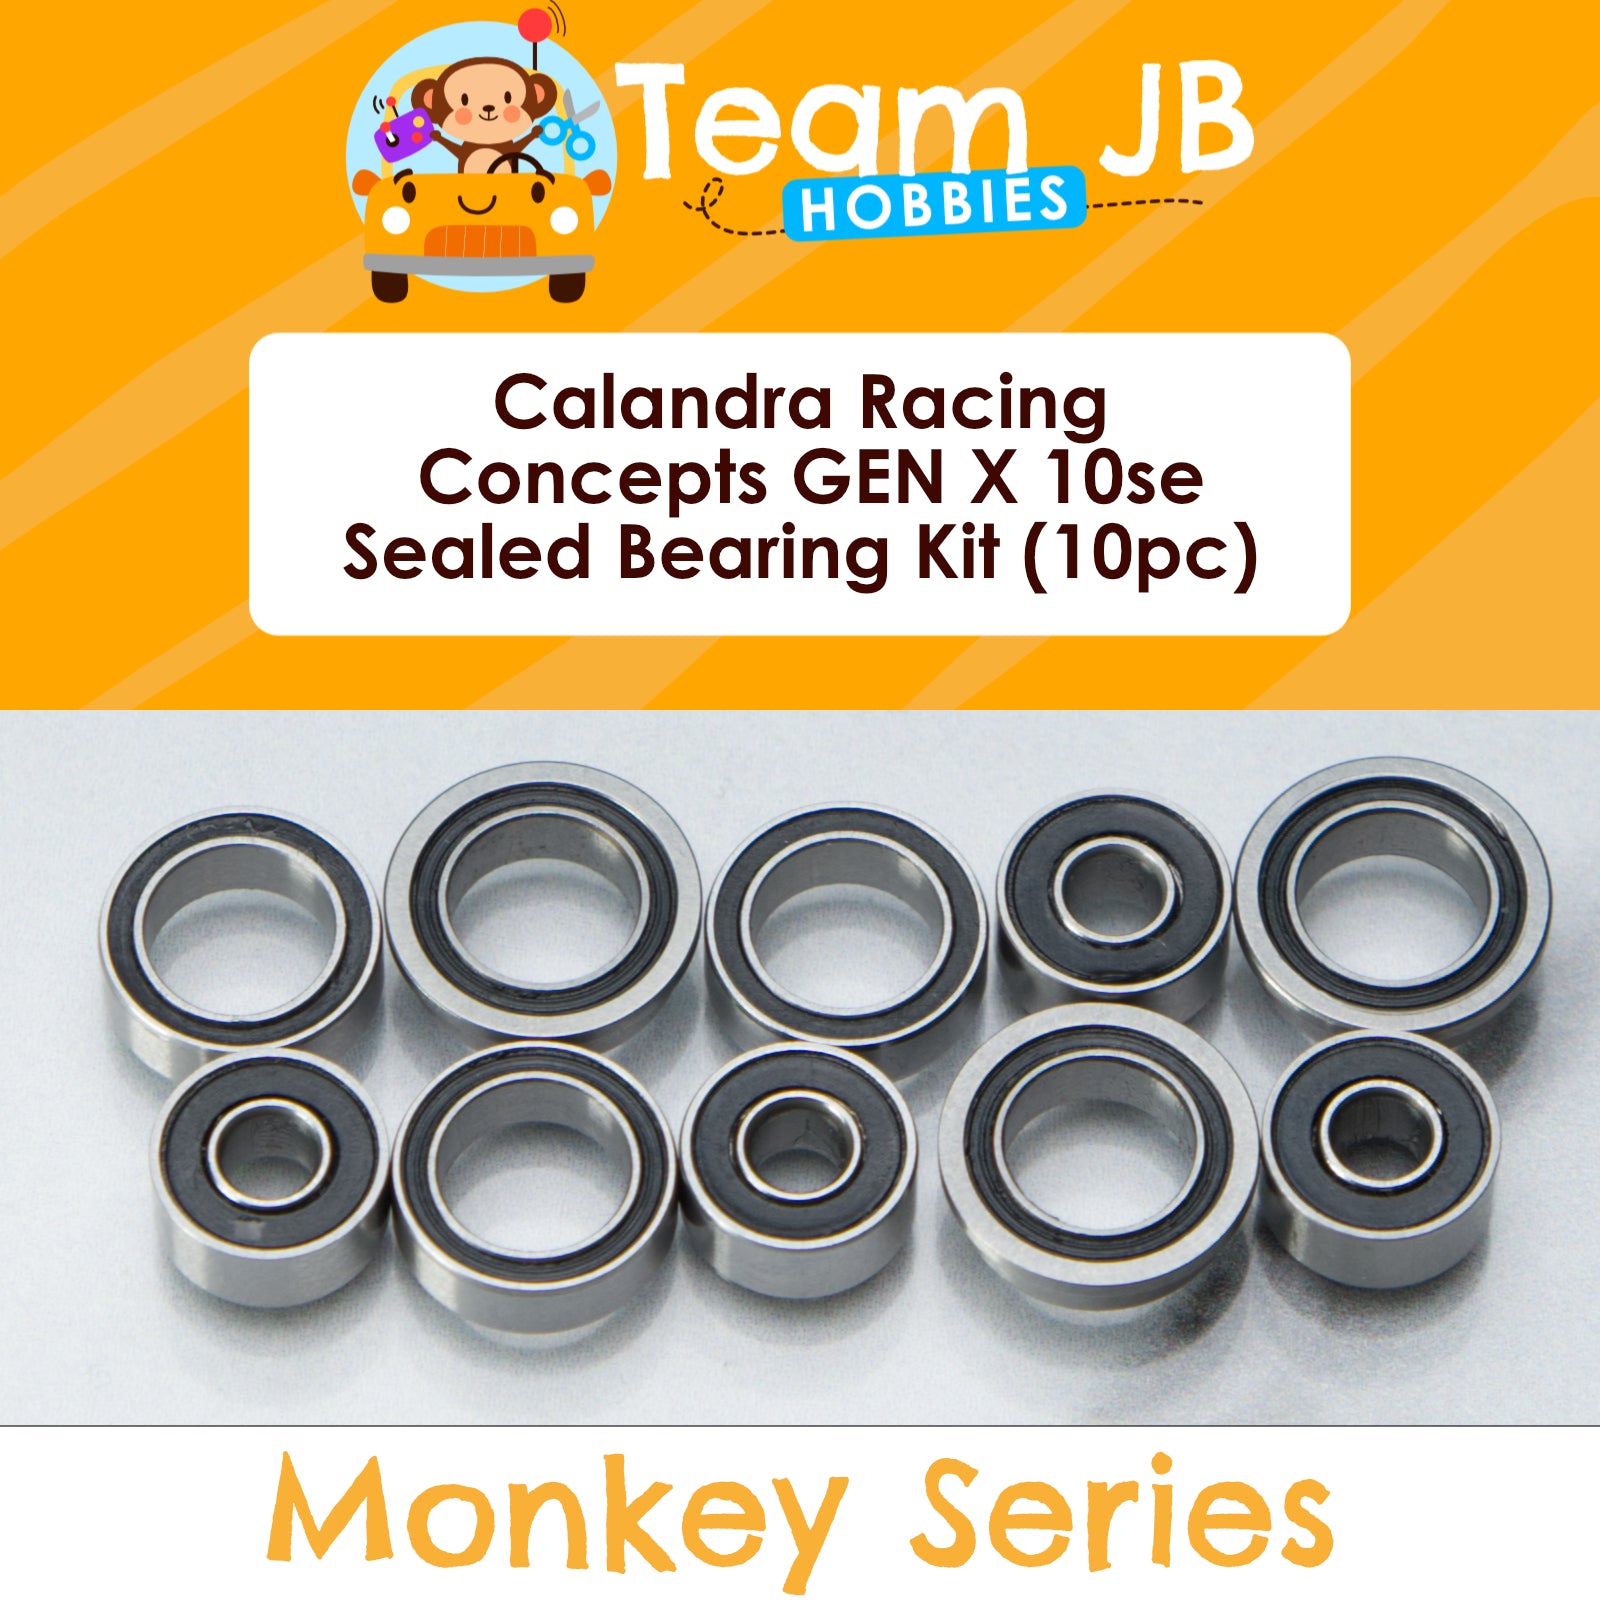 Calandra Racing Concepts GEN X 10se - Sealed Bearing Kit